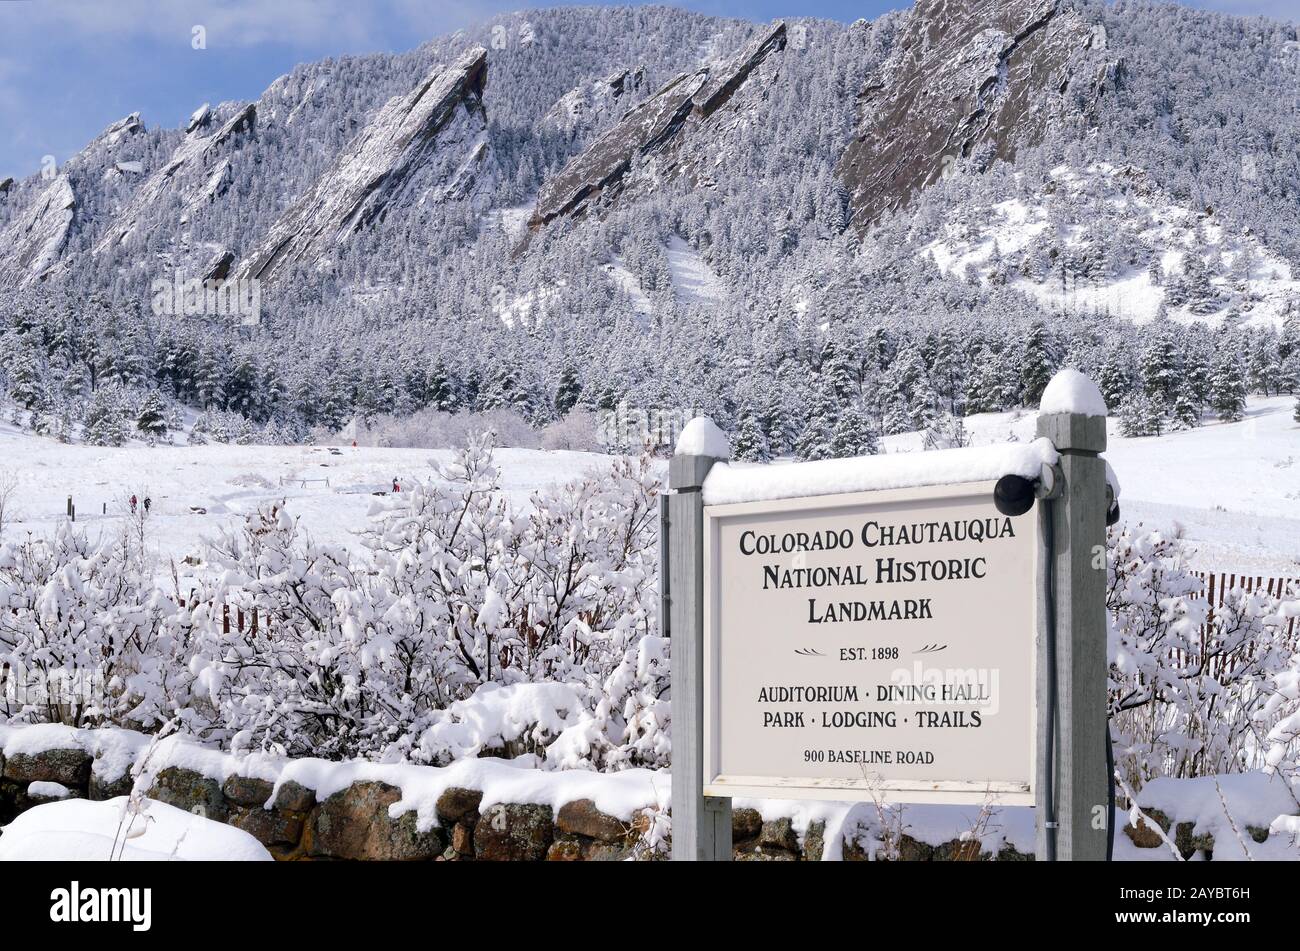 Sign at the entrance of Chautauqua Park in Boulder.  Colorado Chautauqua National Historic Landmark.  Established in 1898. Stock Photo